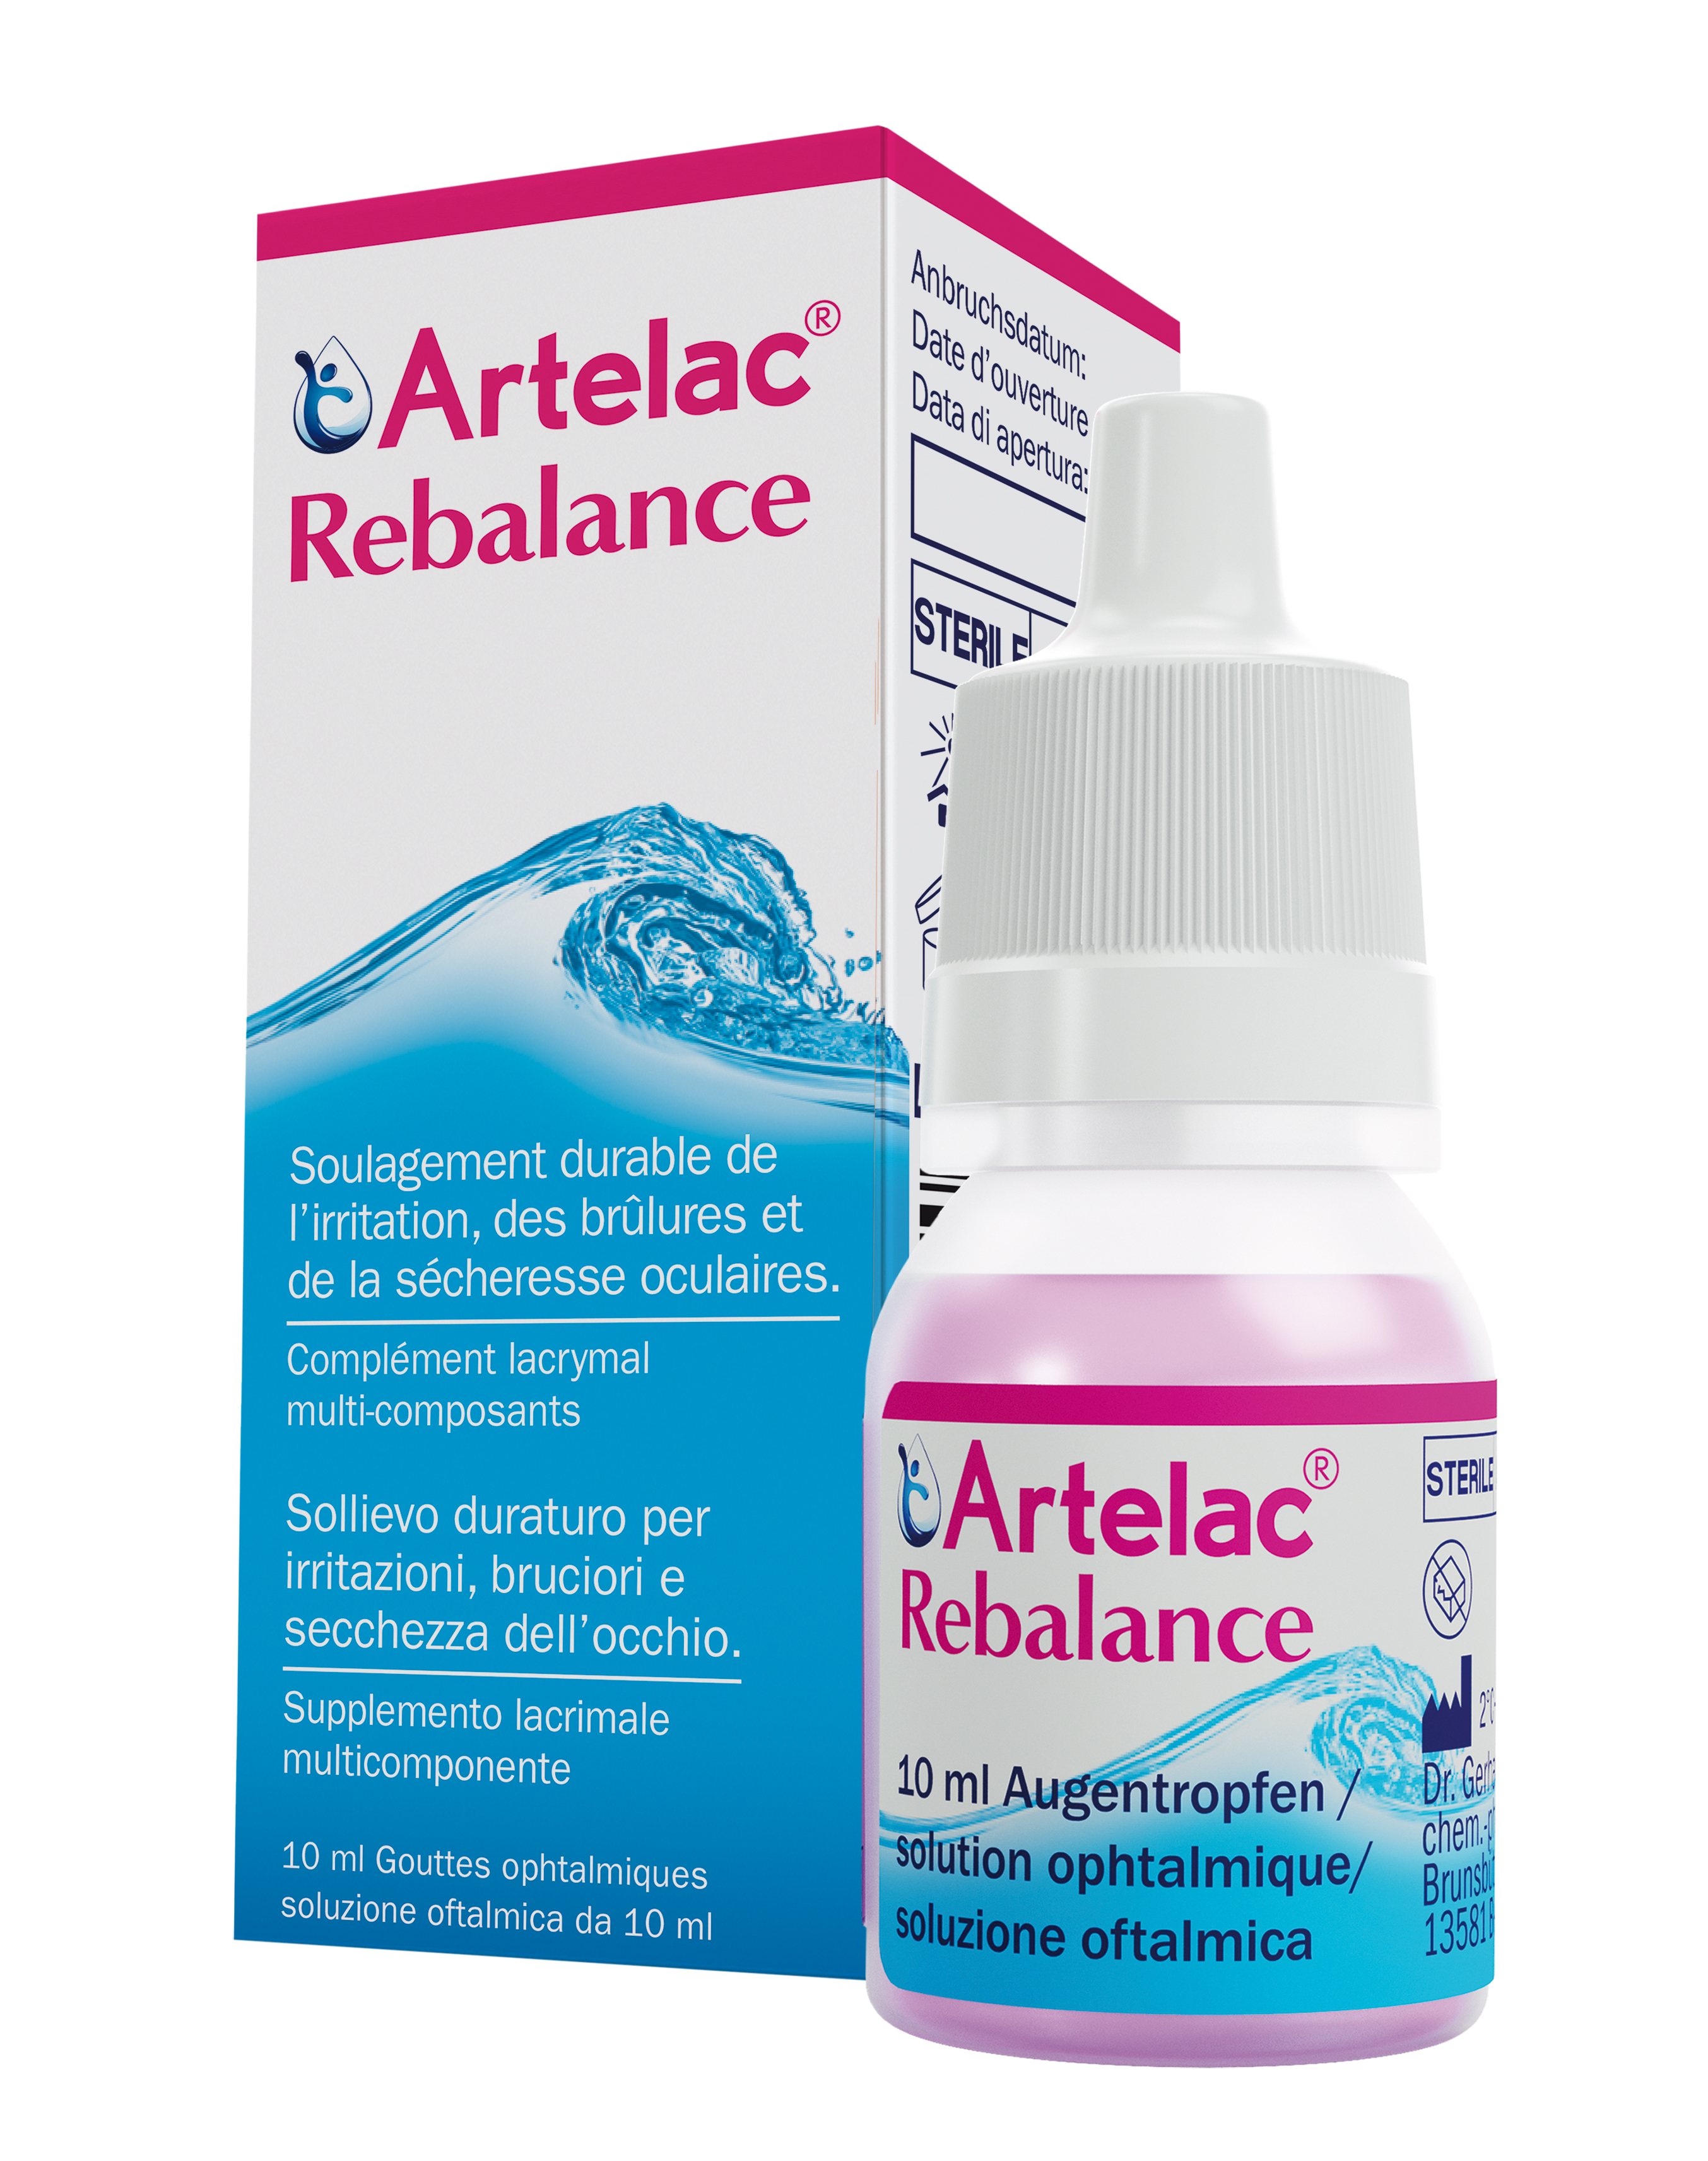 ARTELAC Rebalance, image 2 sur 2